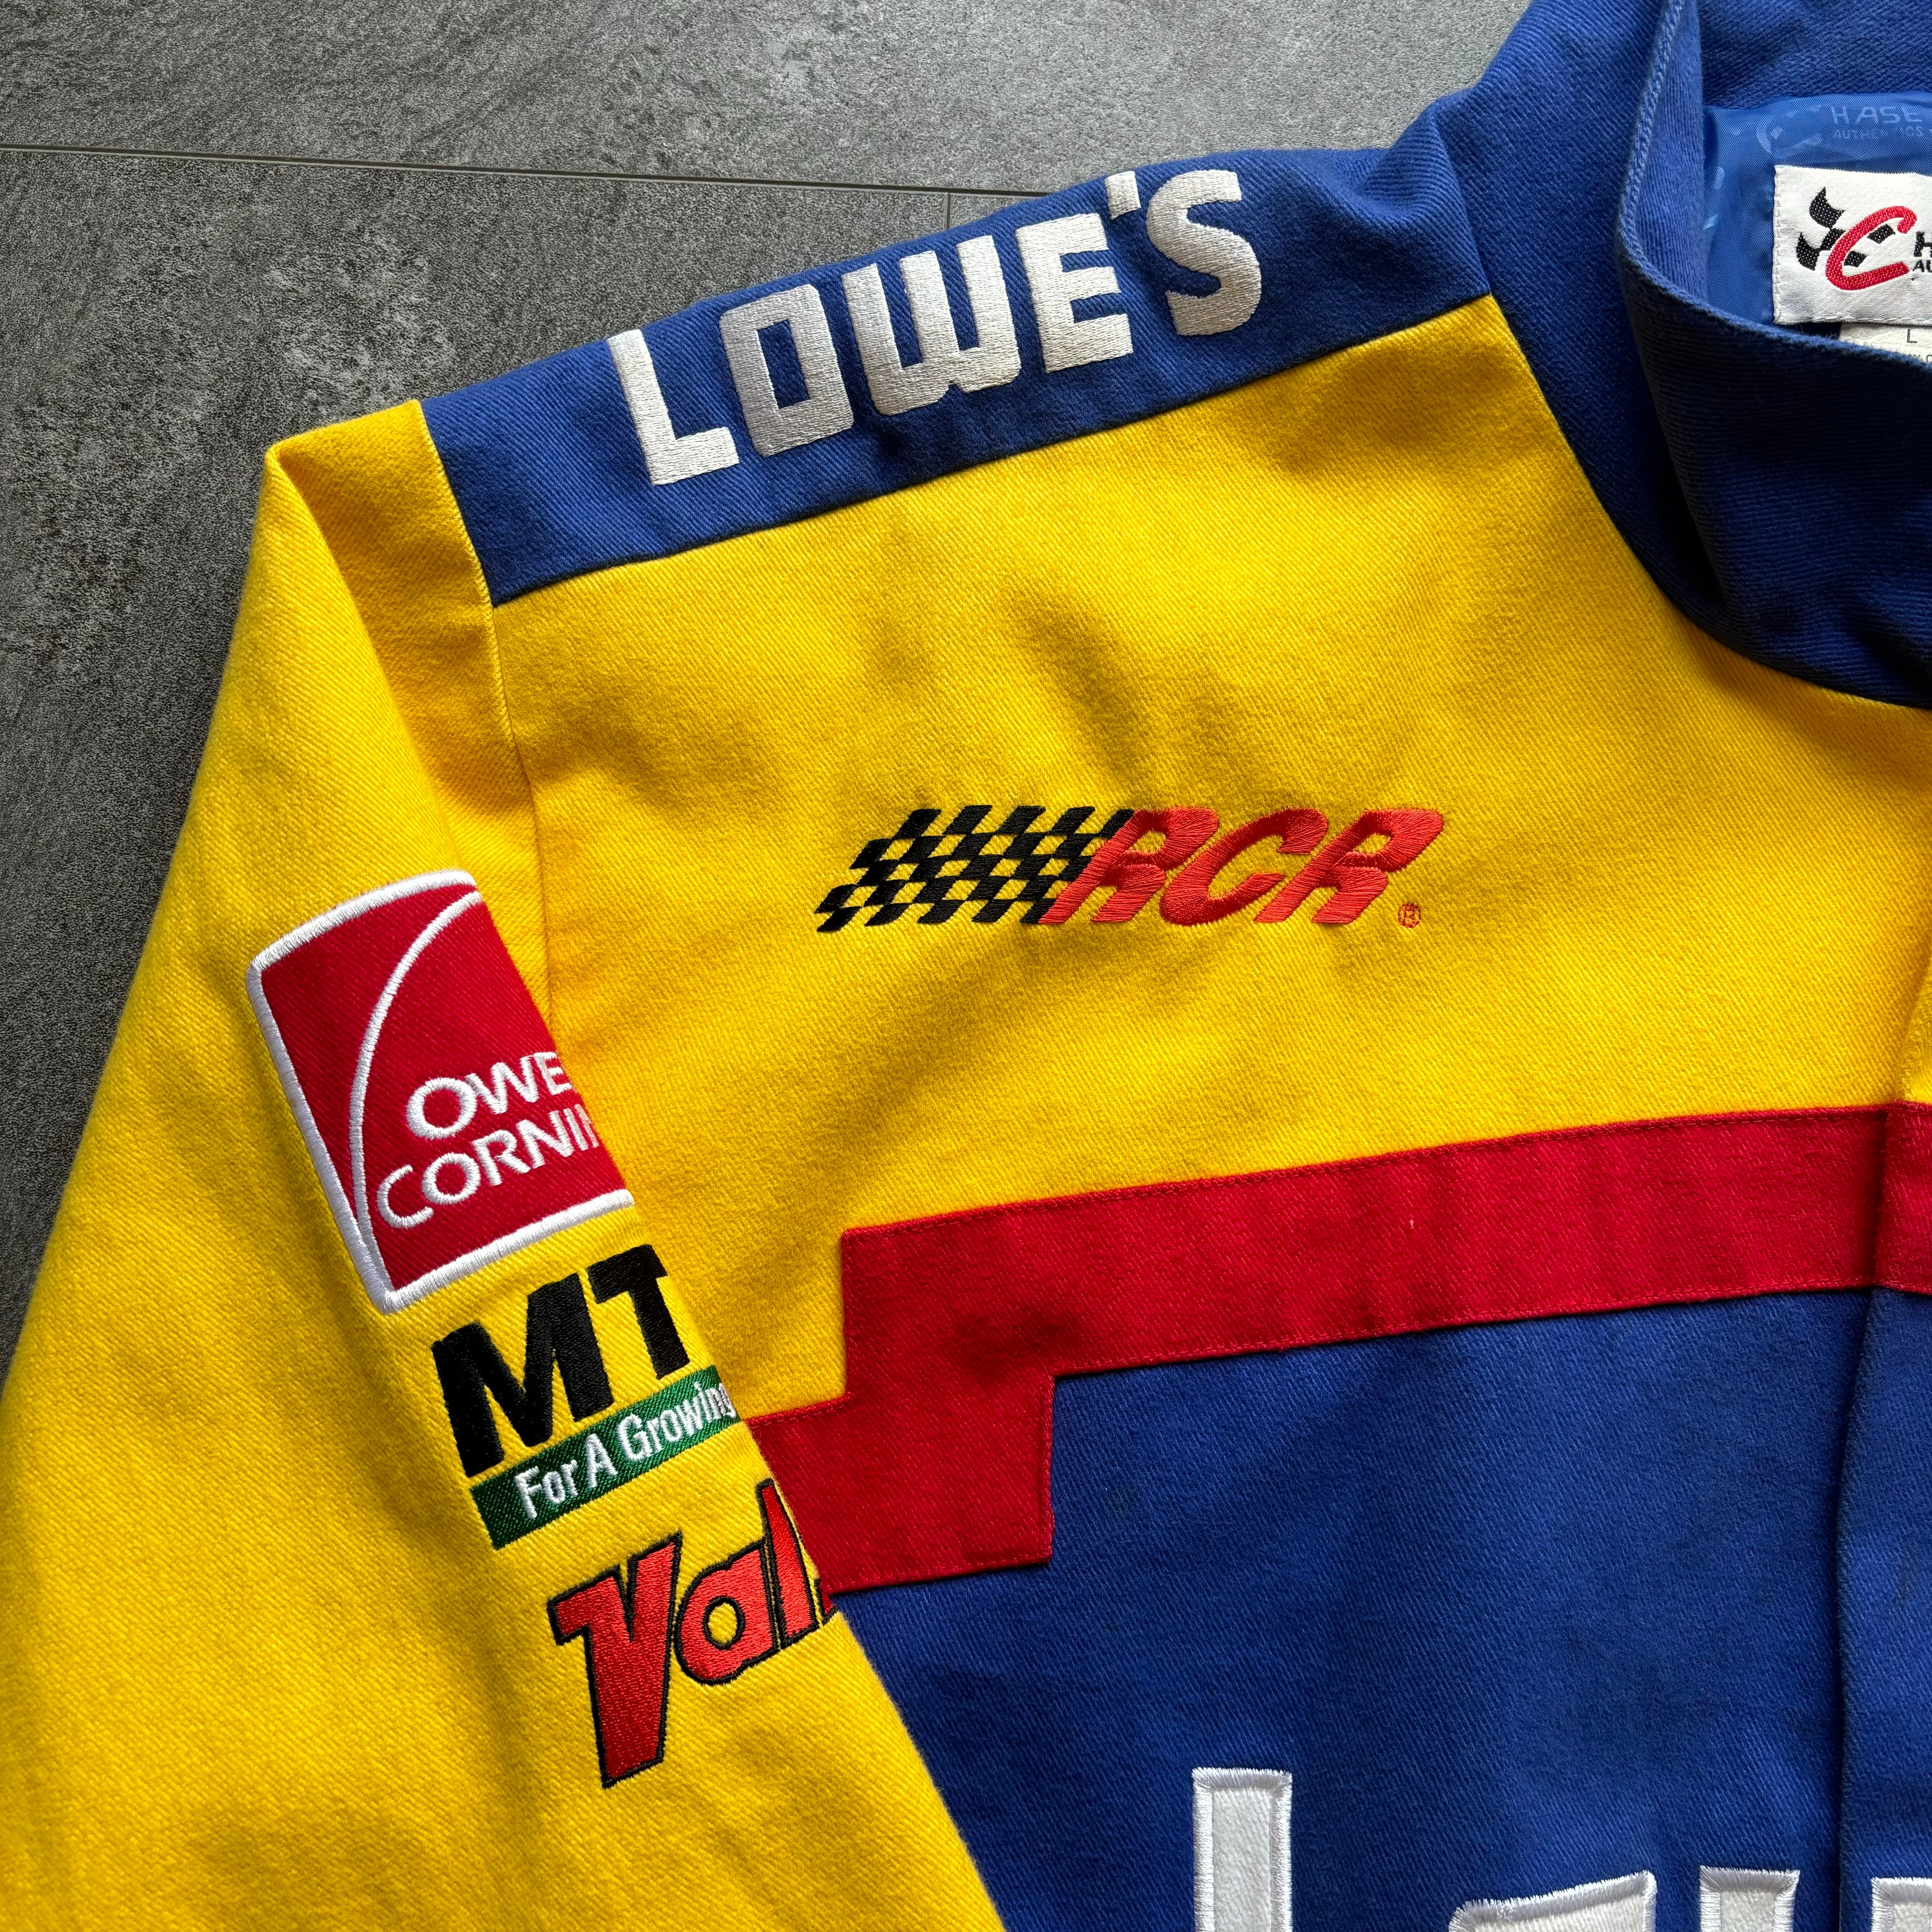 Lowes Home Improvement Nascar Racing jacket